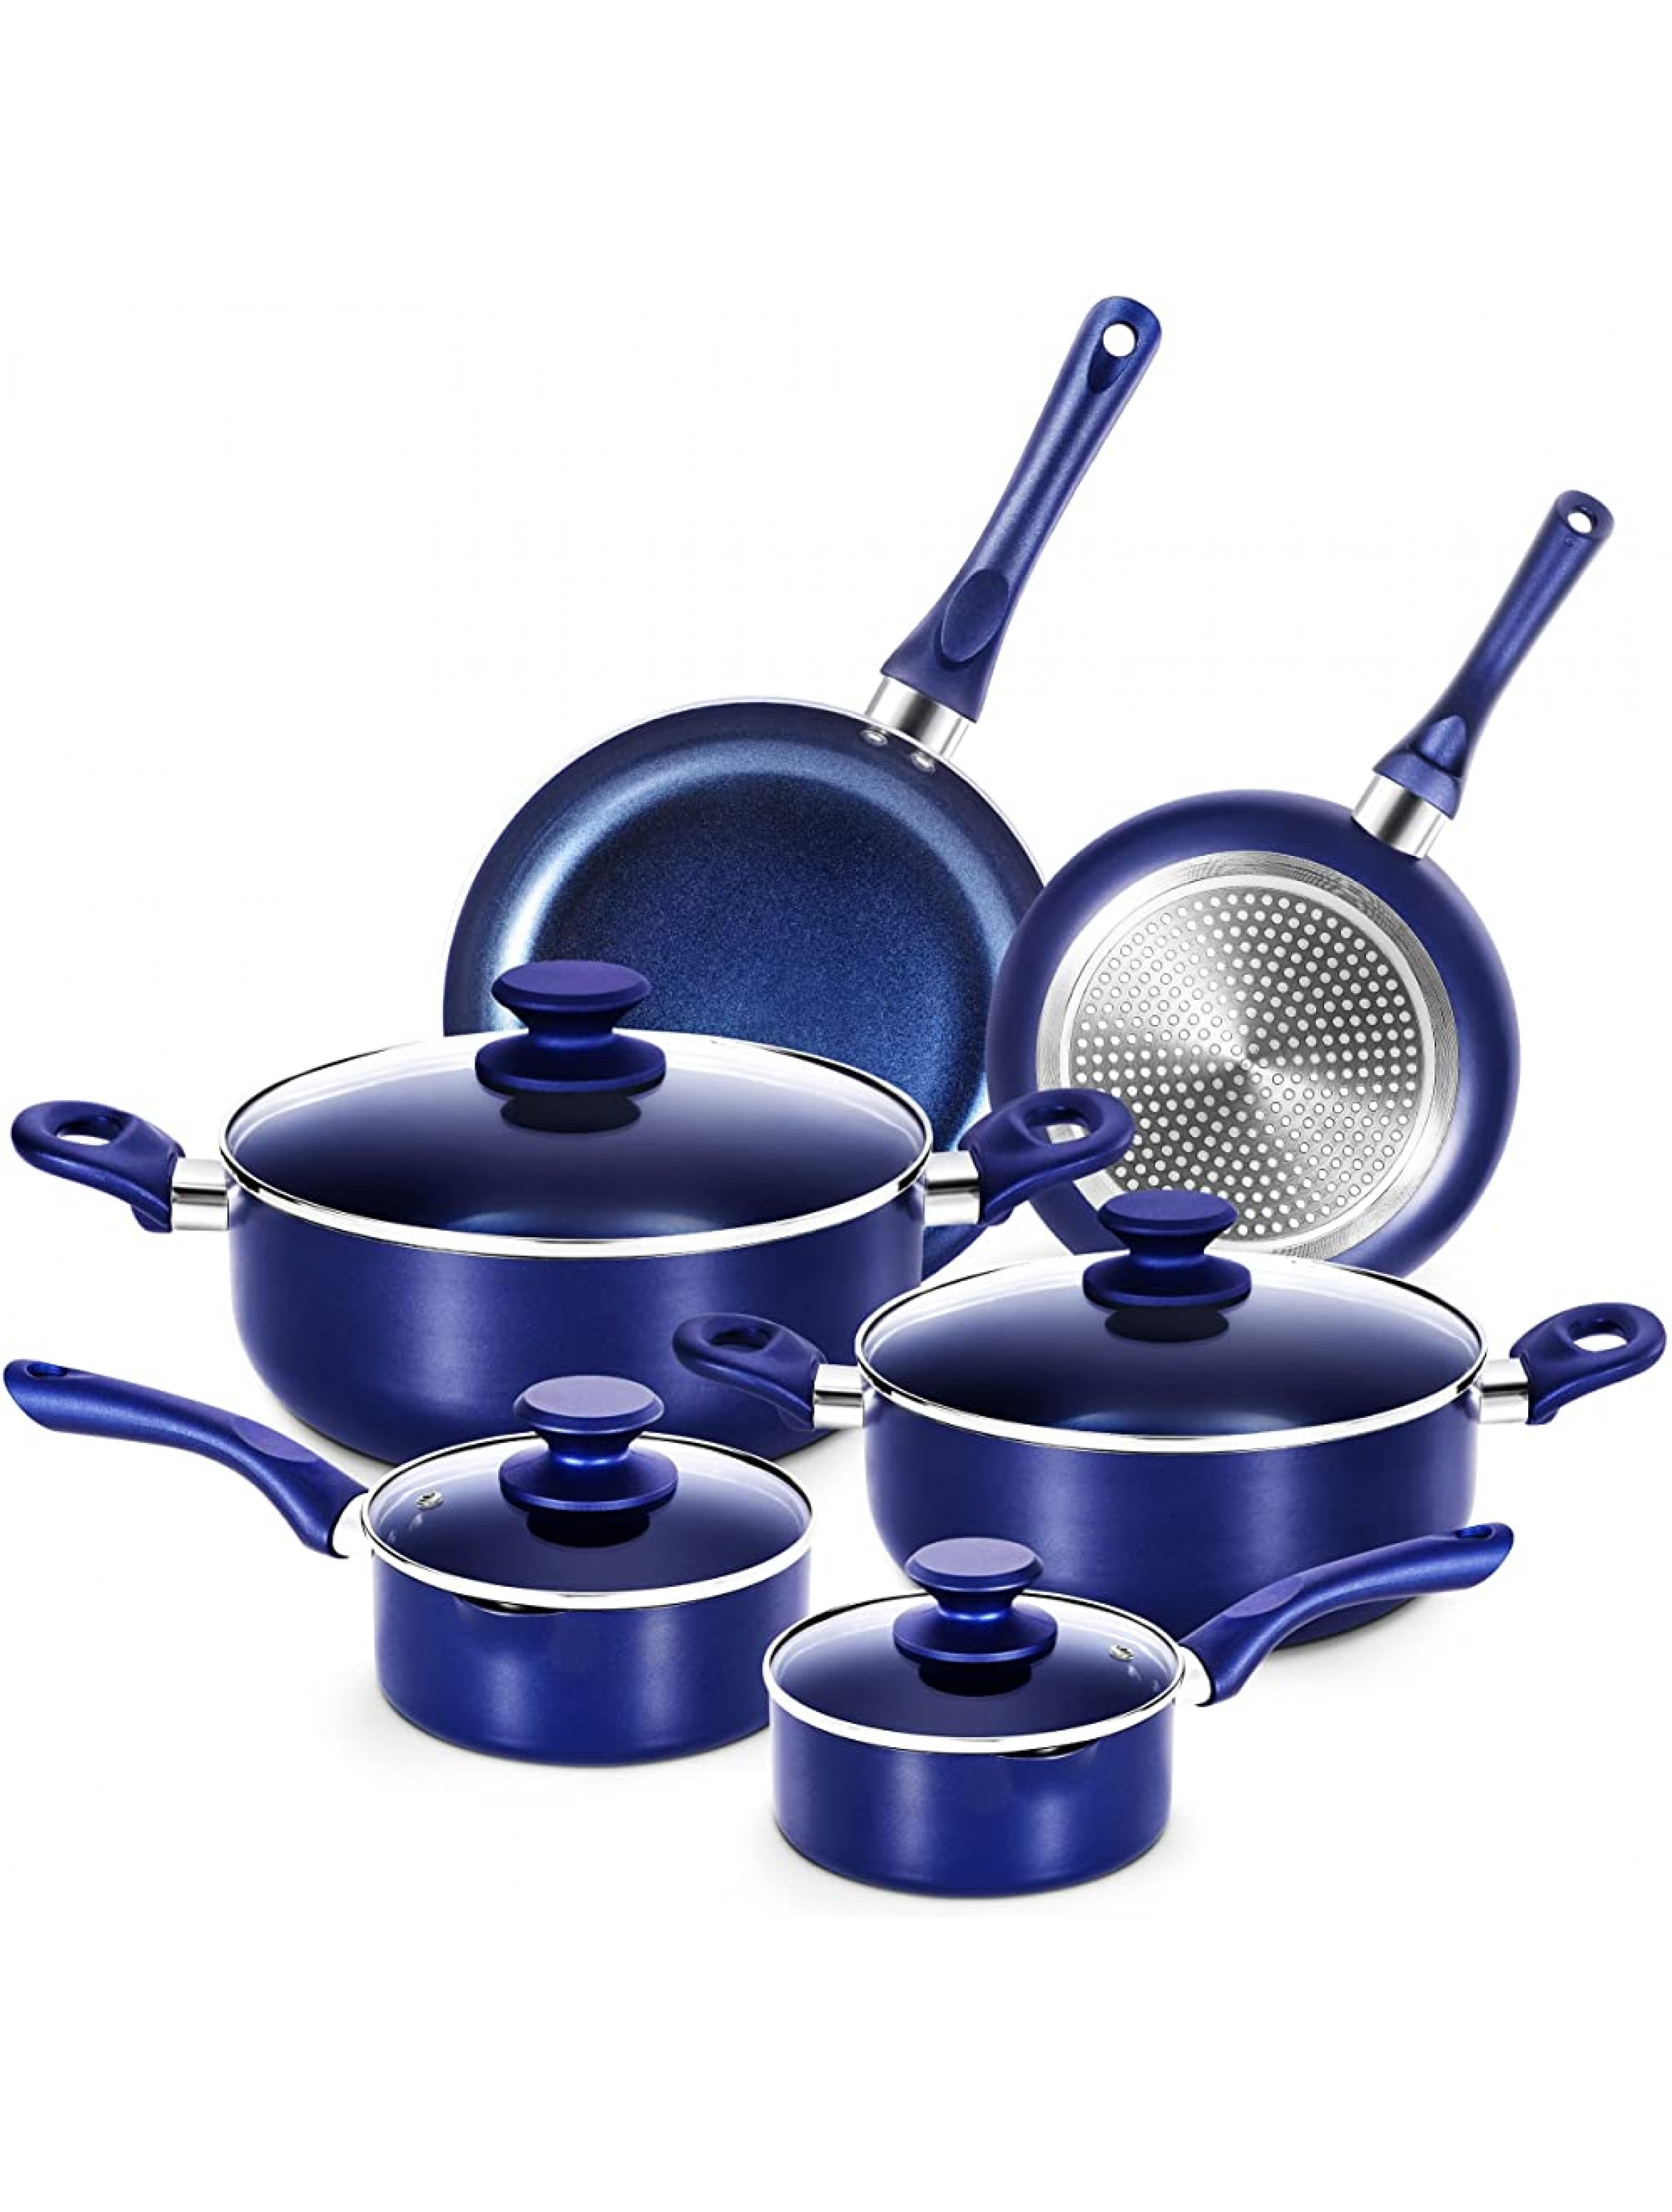 Pots and Pans Set,Aluminum Cookware Set Nonstick Ceramic Coating Fry Pan Stockpot with Lid Blue,10 Pieces - BJY71VCI3